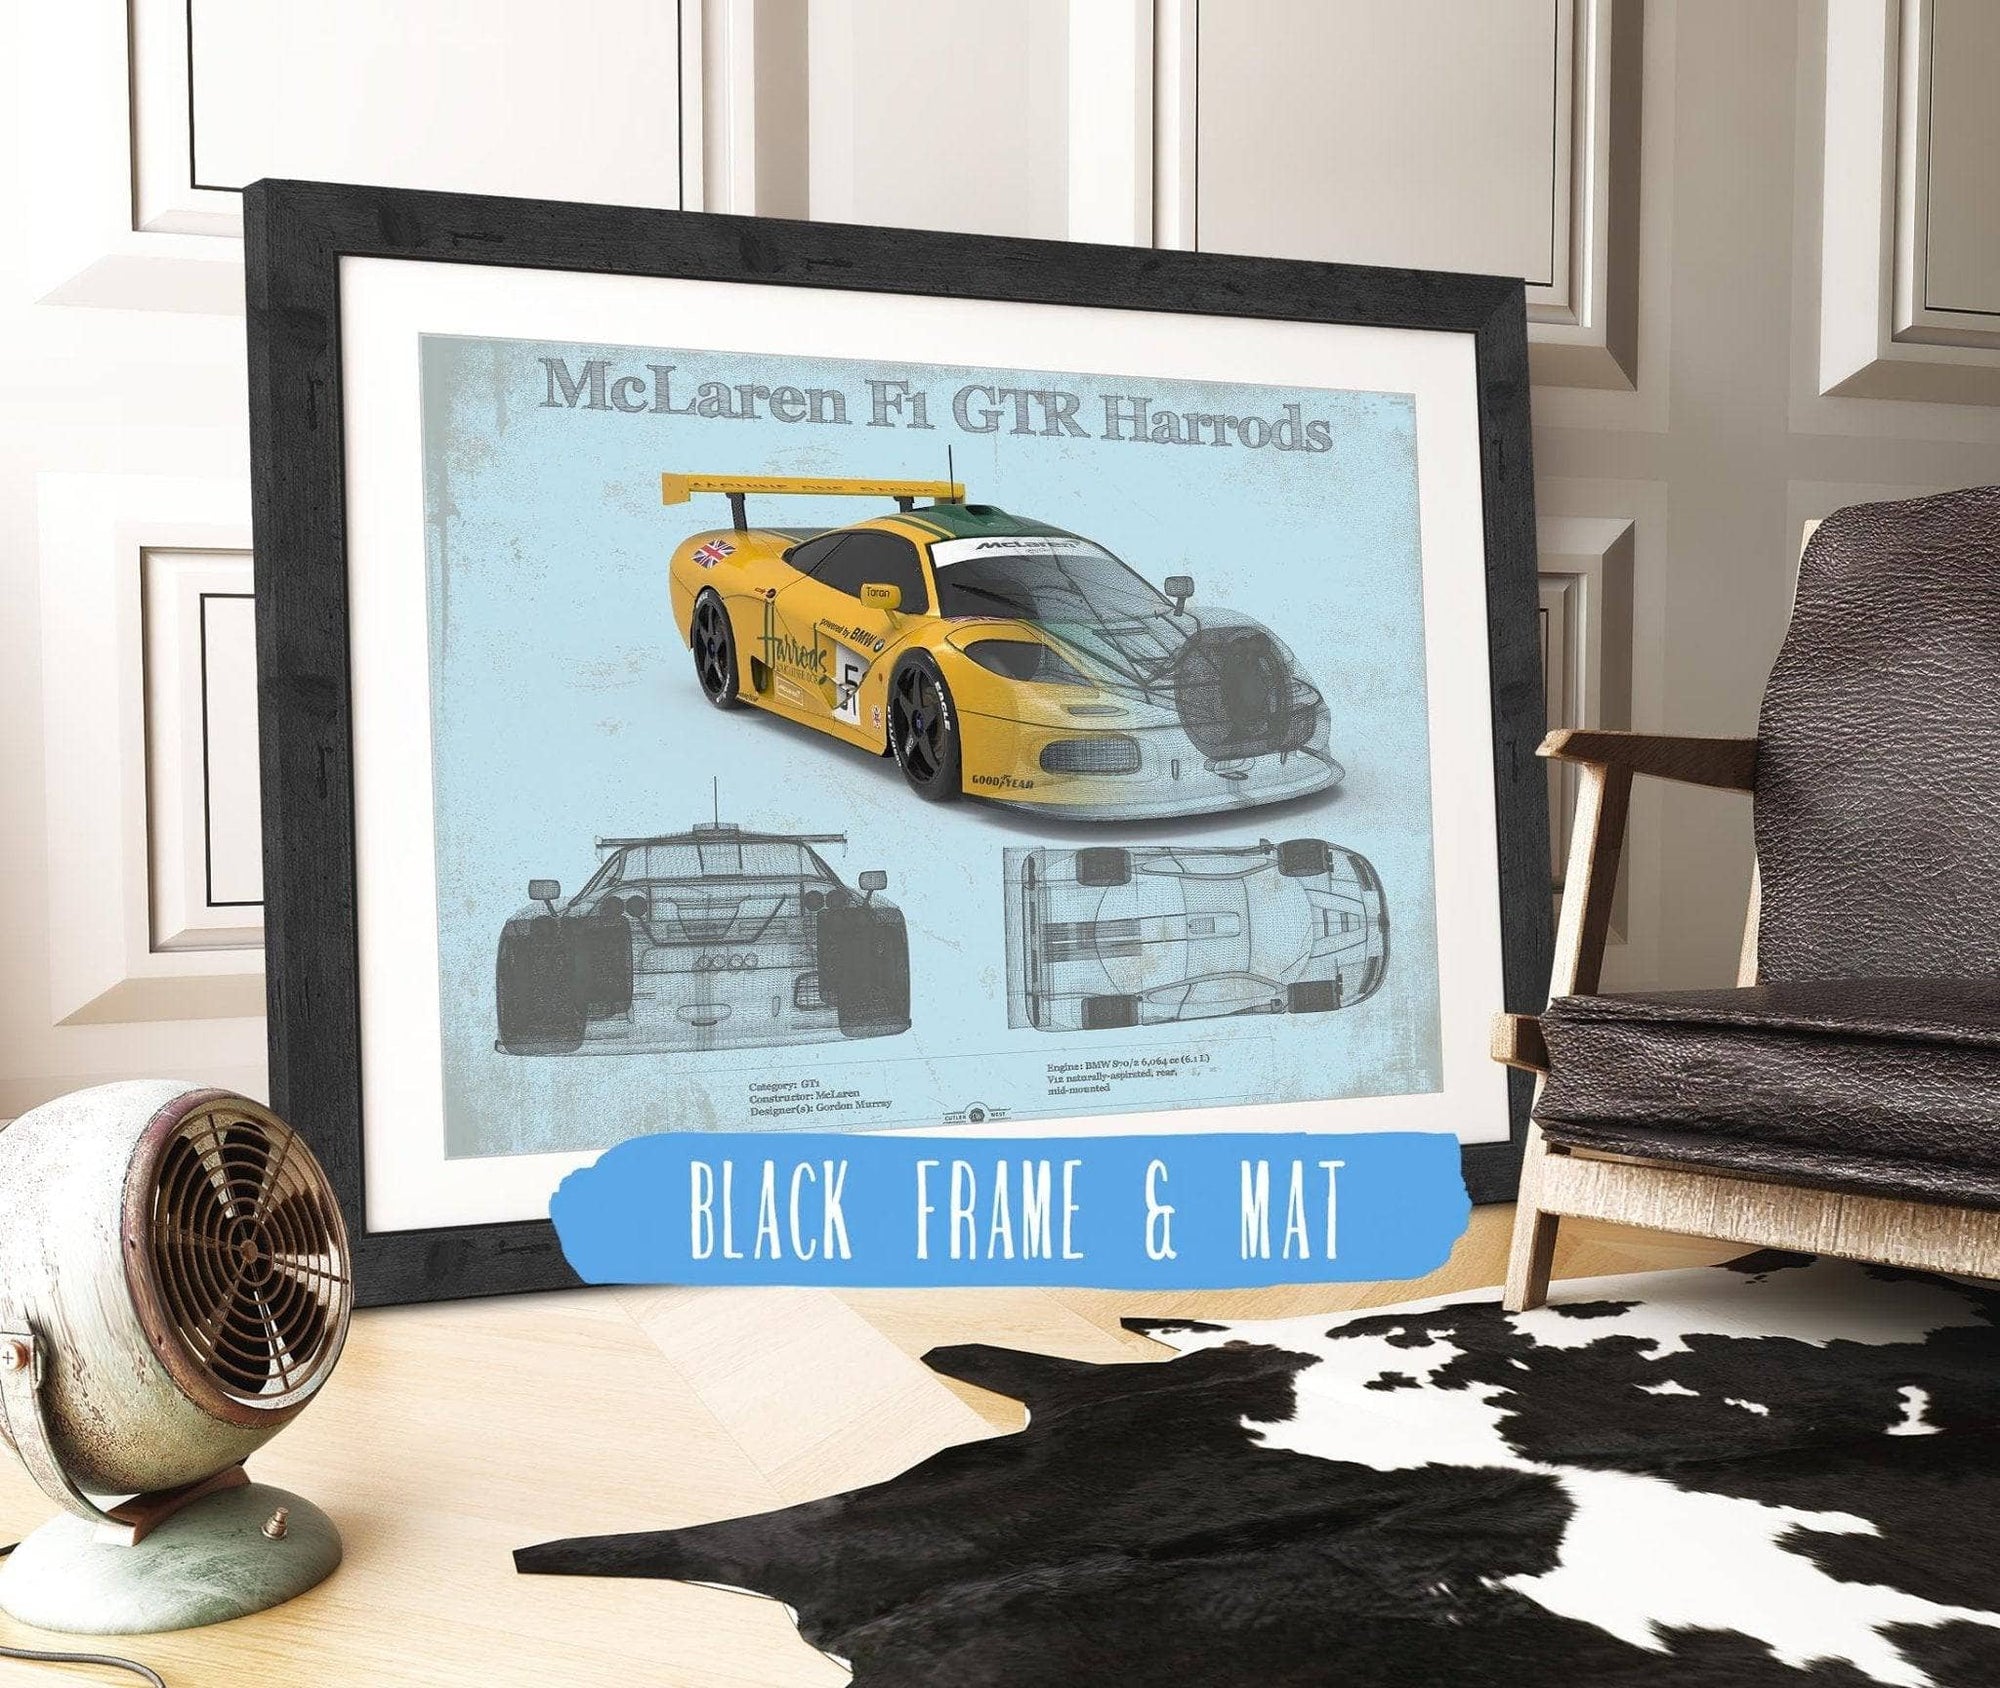 Cutler West McLaren F1 GTR Harrods Blueprint Vintage Auto Print